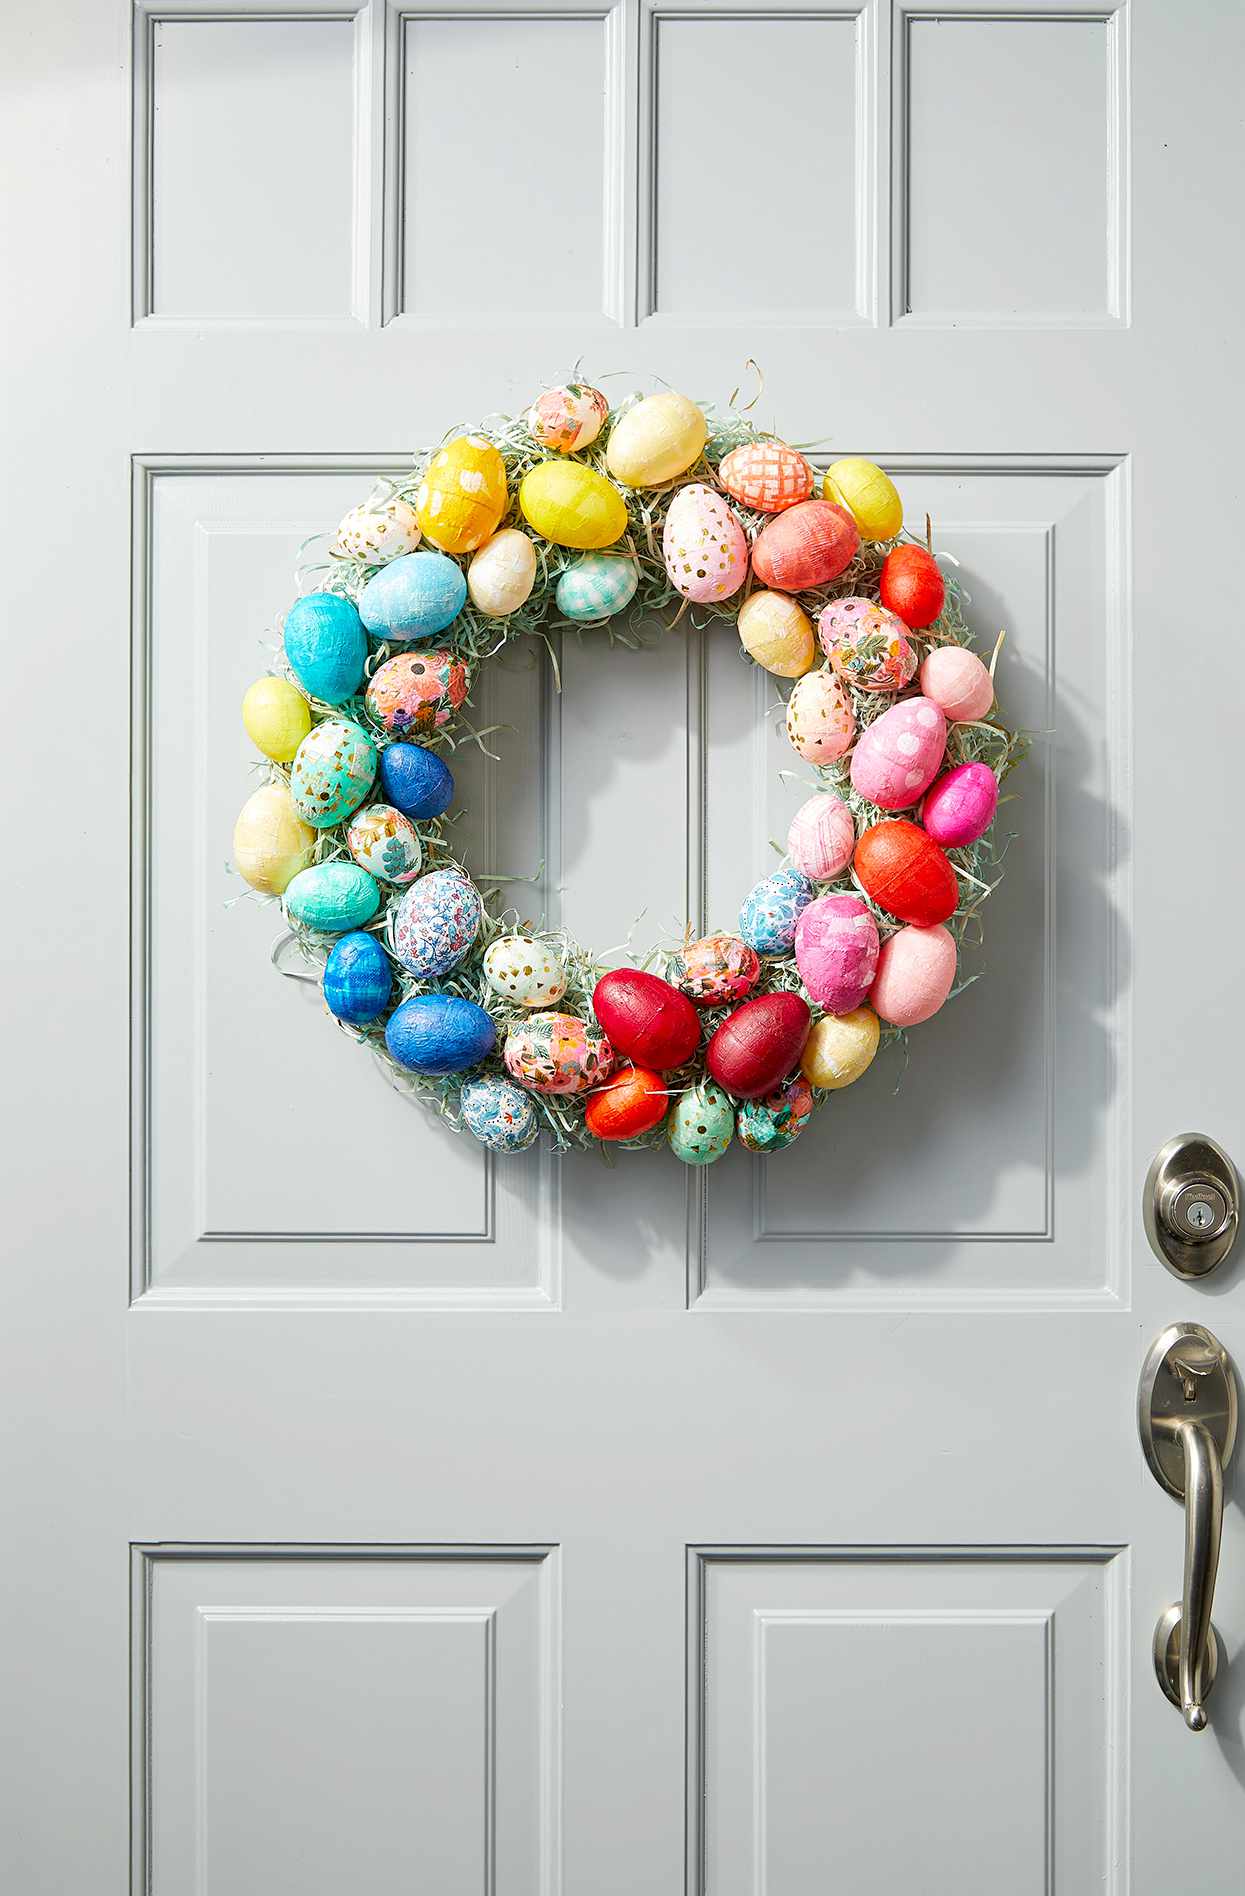 Mini Eggs For Easter Festival Artificial Birds Egg Creative Home Decor Ornaments 